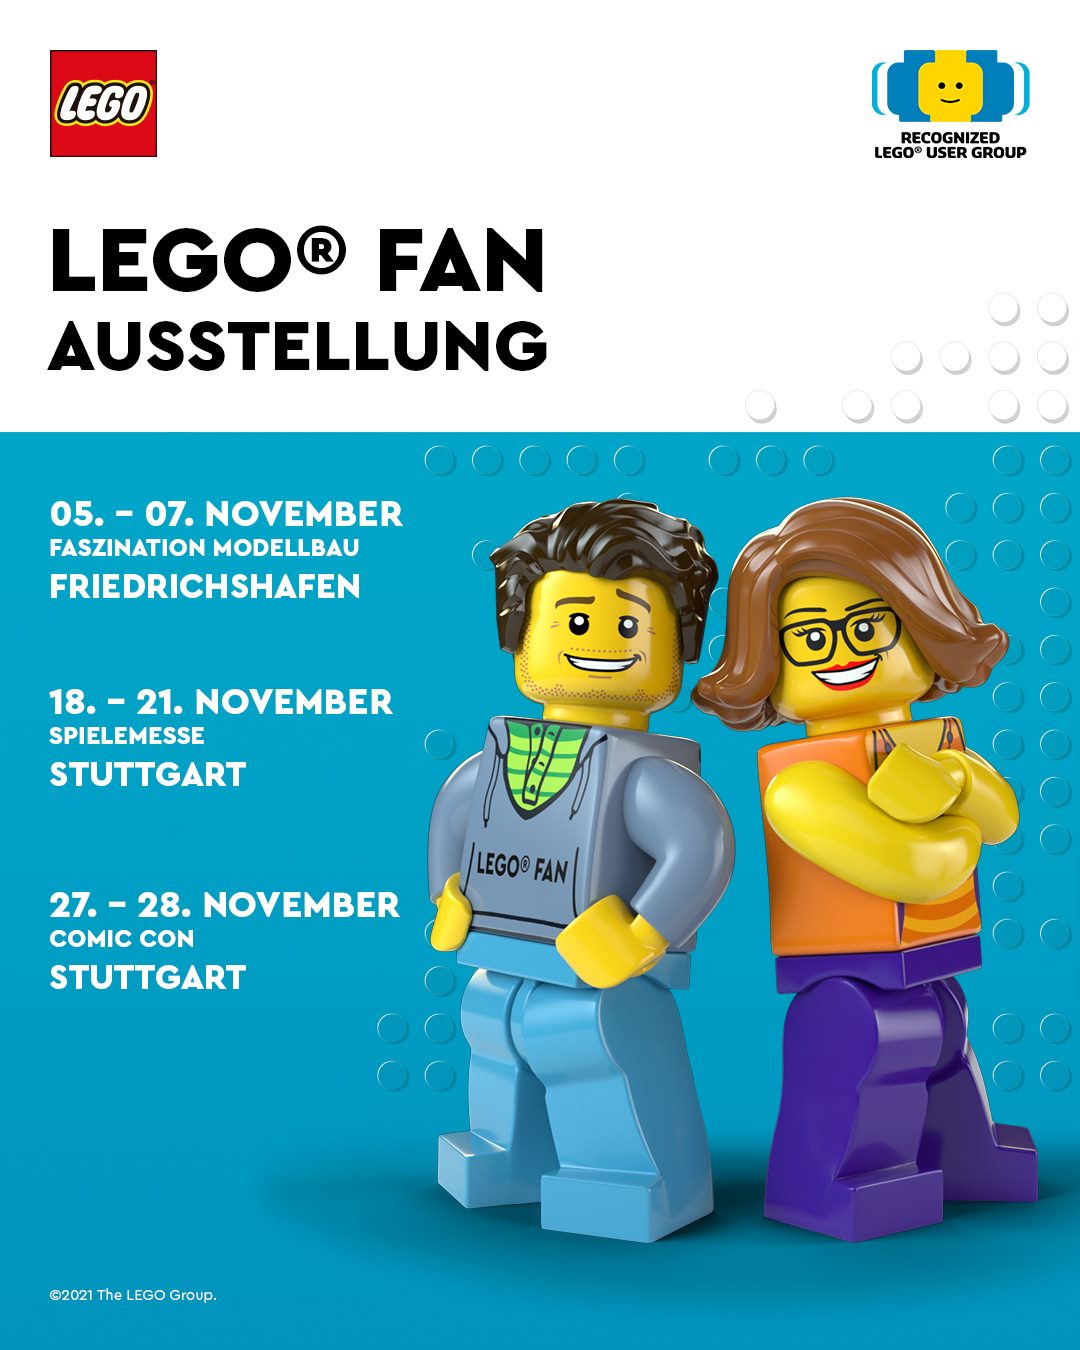 LEGO Fan Ausstellung